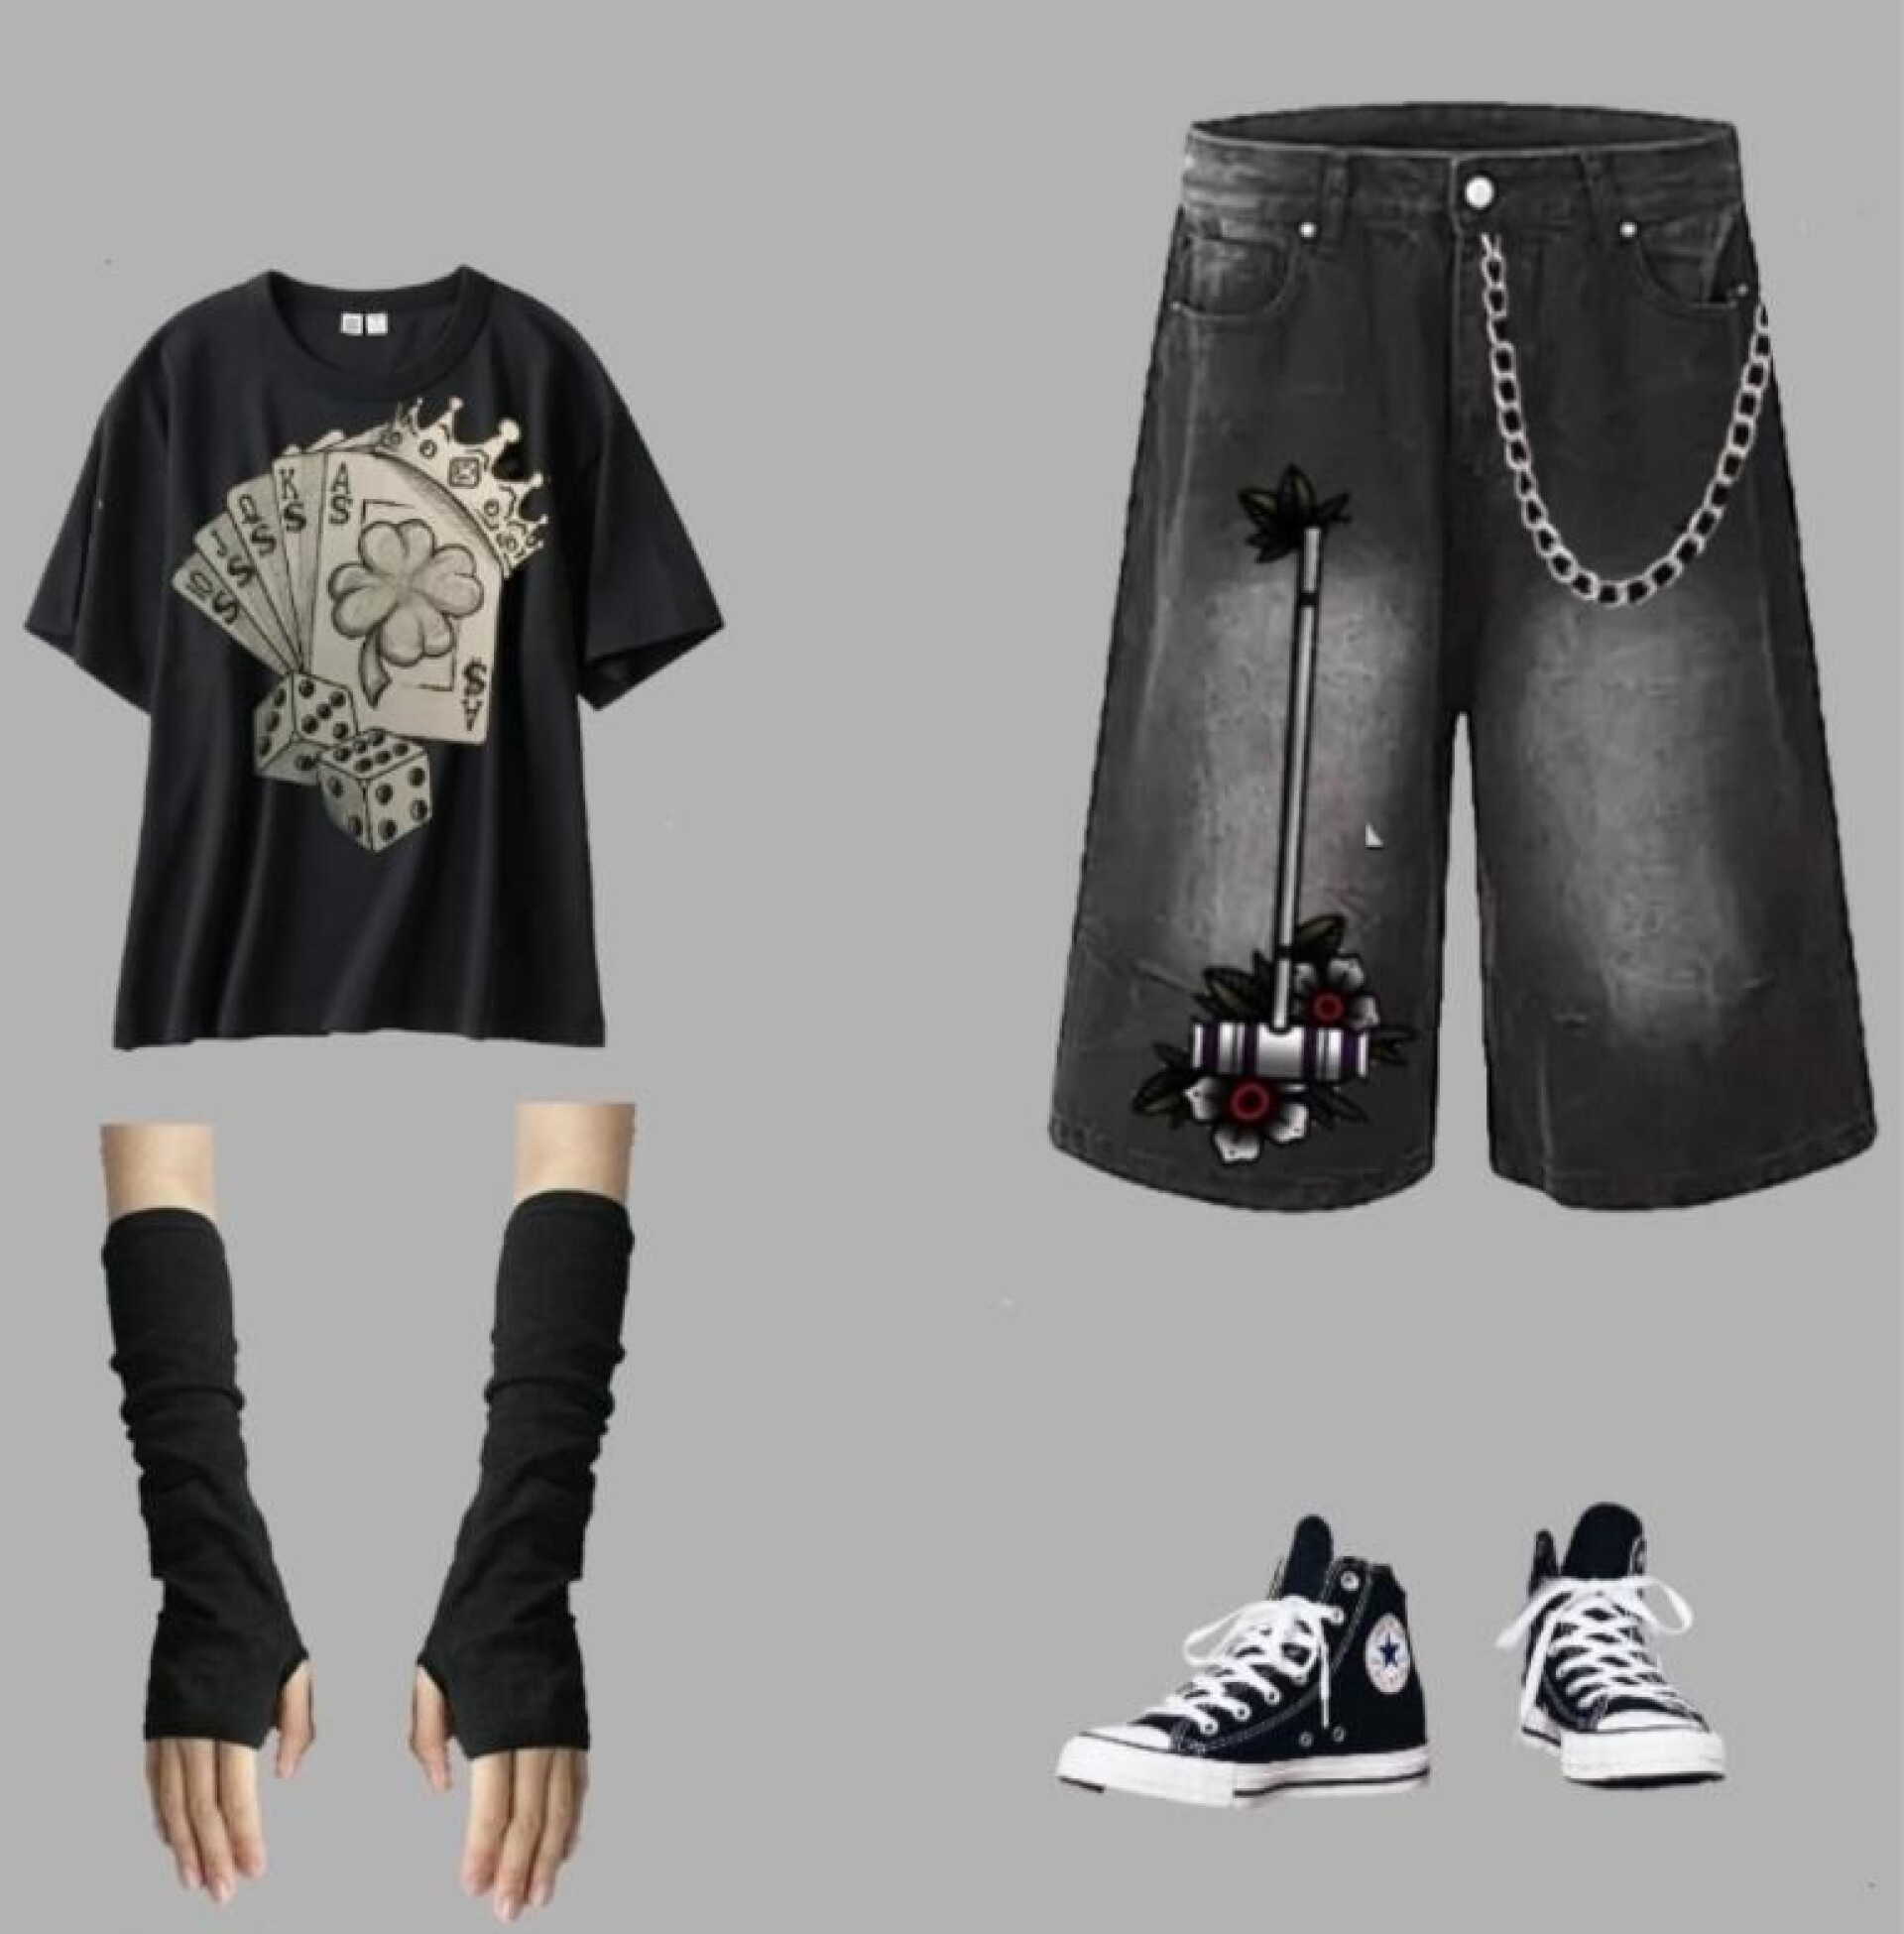 Комплект панк рок одежды - CO:CREATE